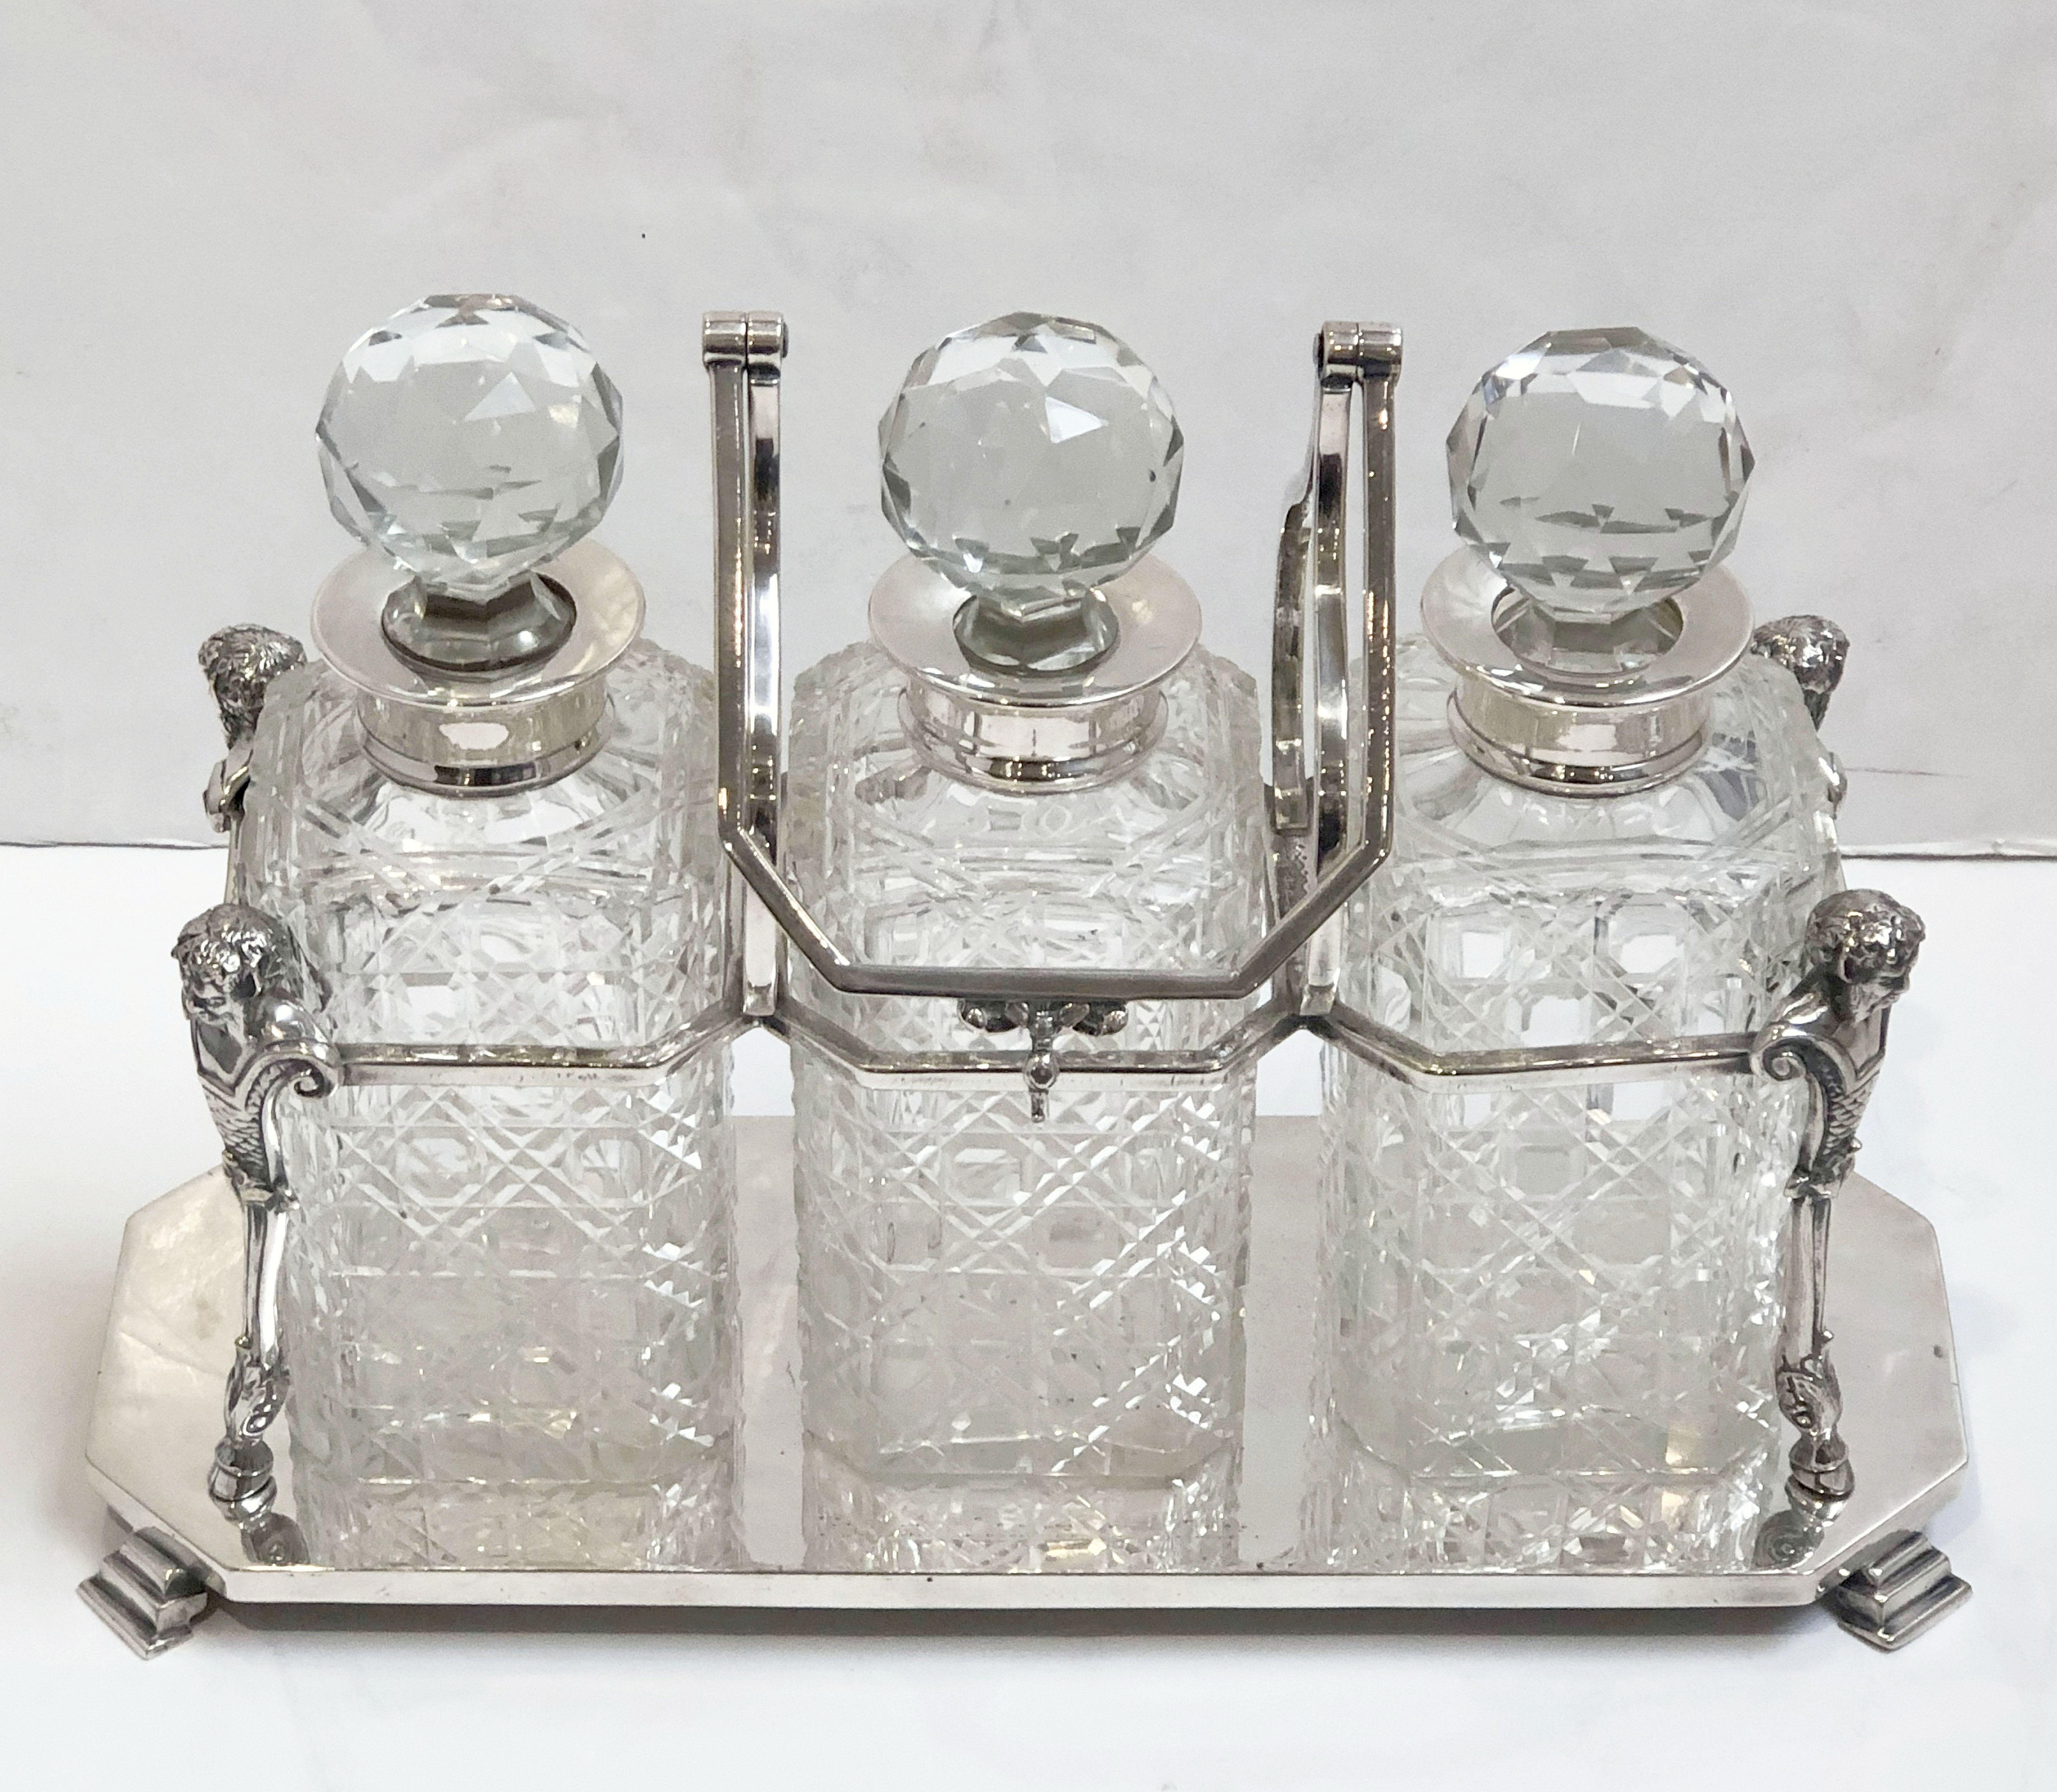 19th Century English Three-Bottle Decanter or Tantalus Drinks Set